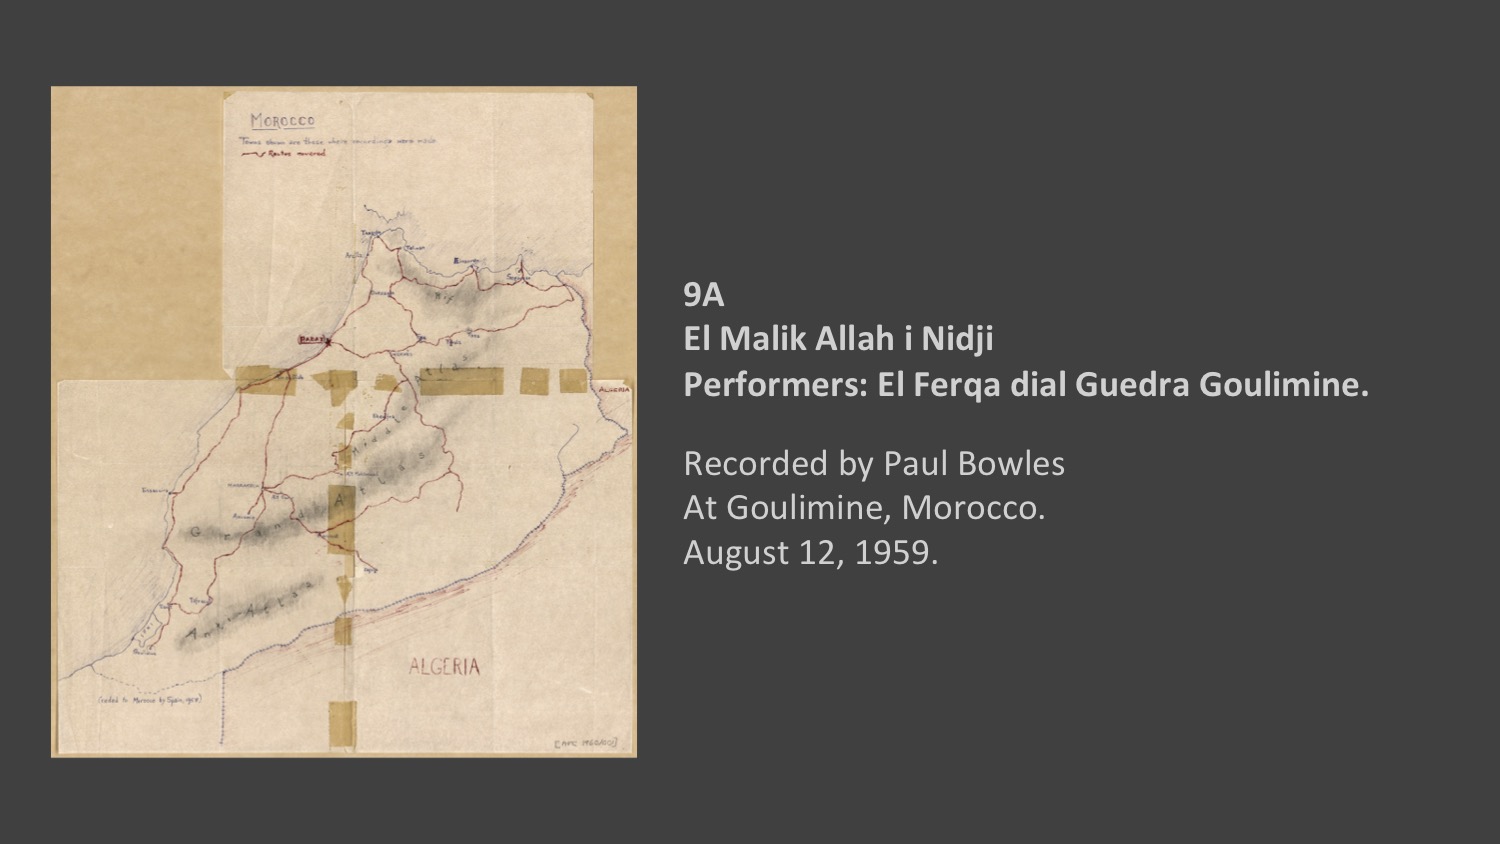 Badi' Palace - 9A El Malik Allah i Nidji
Performers: El Ferqa dial Guedra Goulimine 

Recorded by Paul Bowles at Goulimine, Moroccan Sahara.
August 12, 1959
